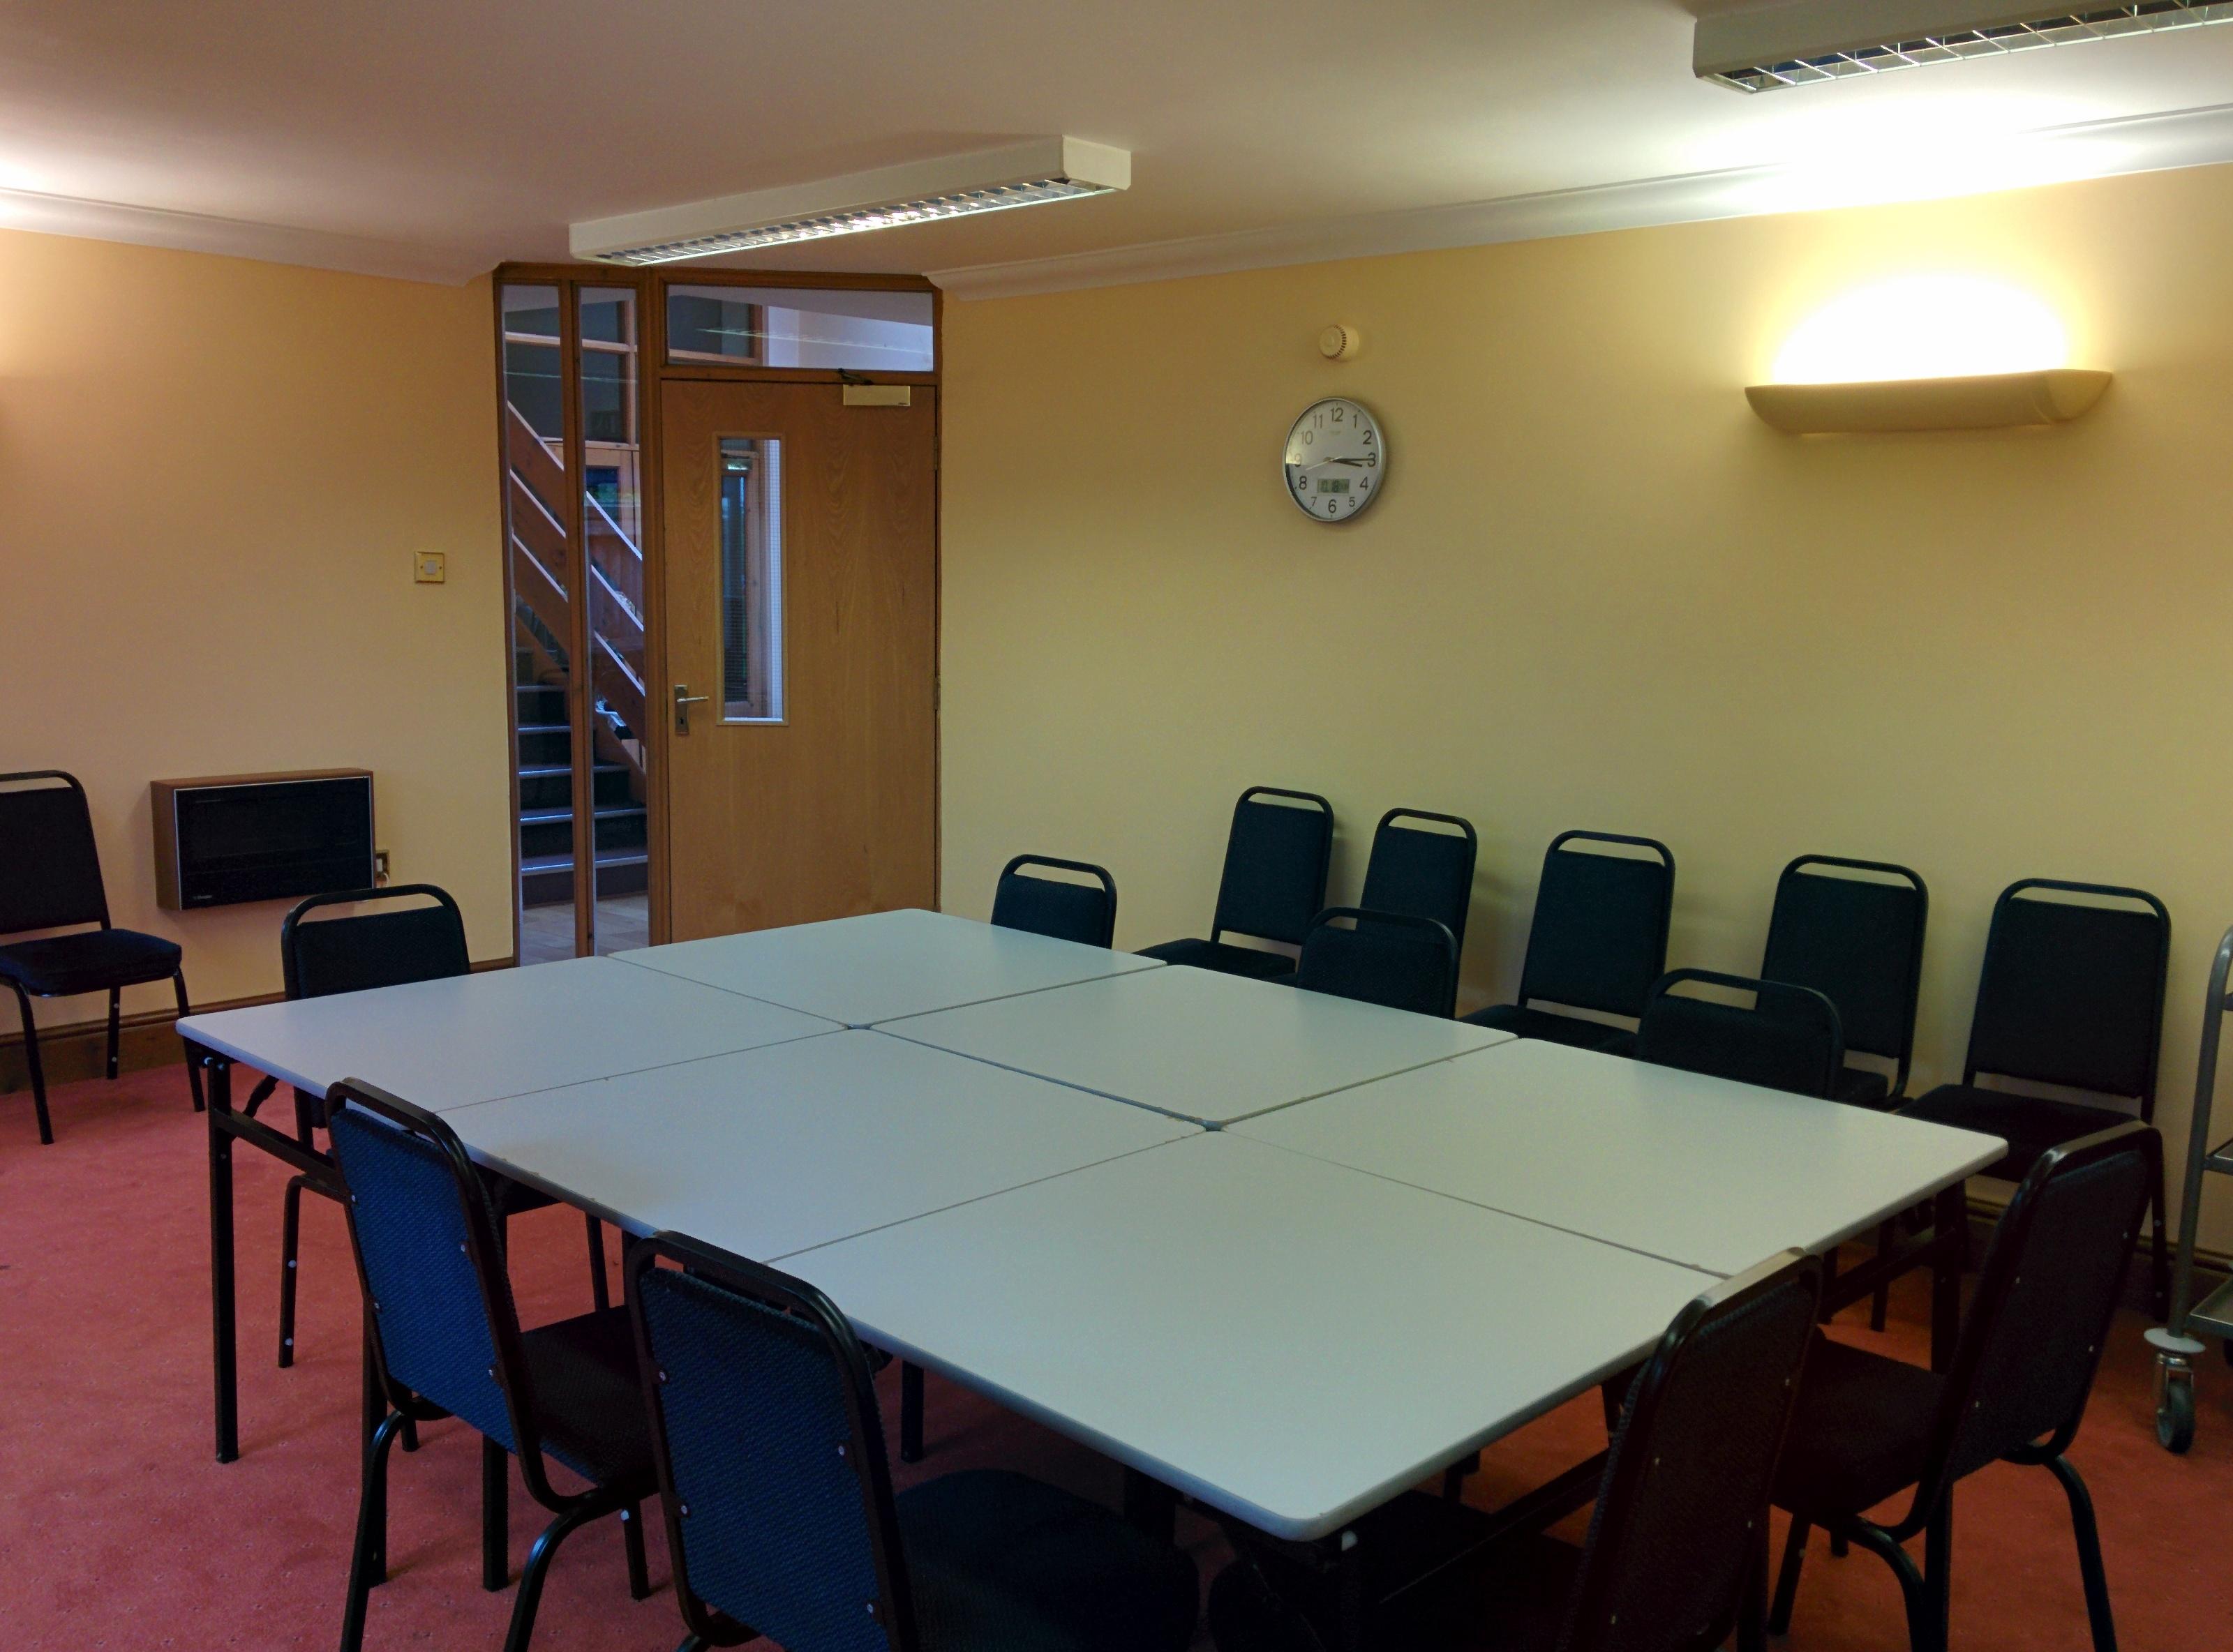 The meeting room at Dymock Parish Hall.